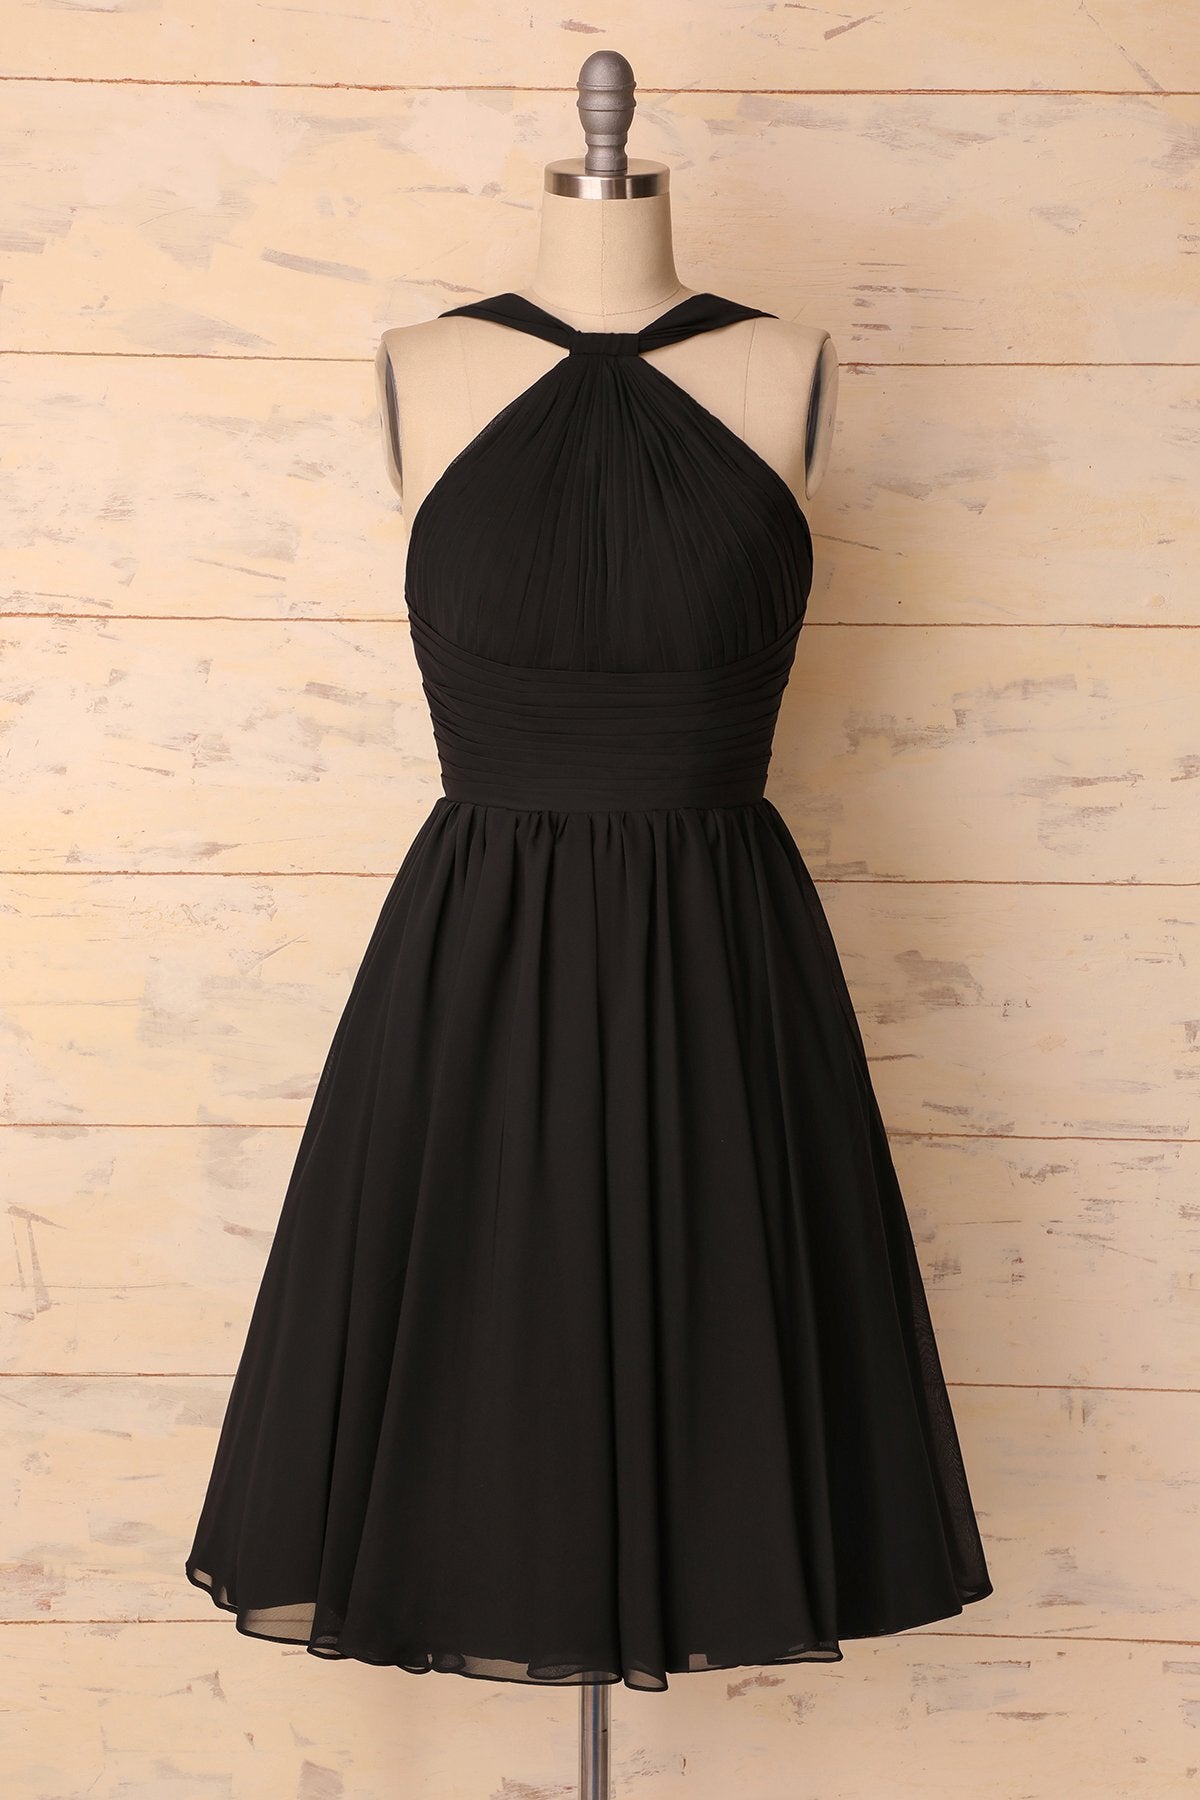 Vintage Style A-line Black Chiffon Dress